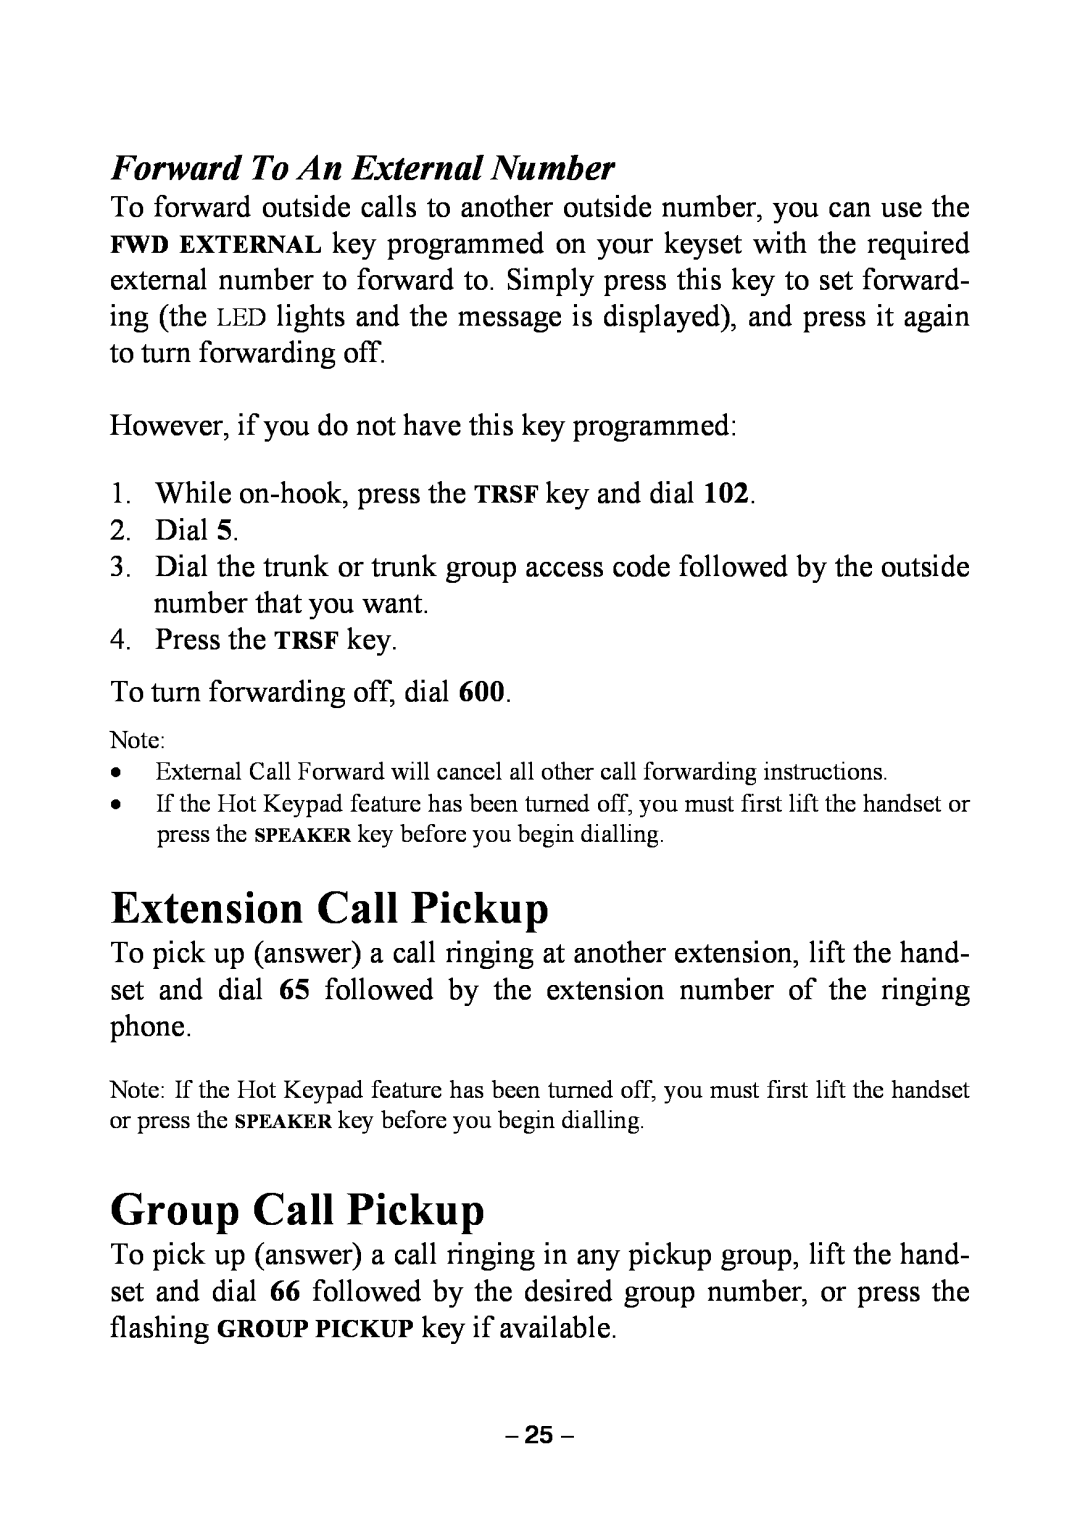 Samsung DCS KEYSET manual Extension Call Pickup, Group Call Pickup, Forward To An External Number 